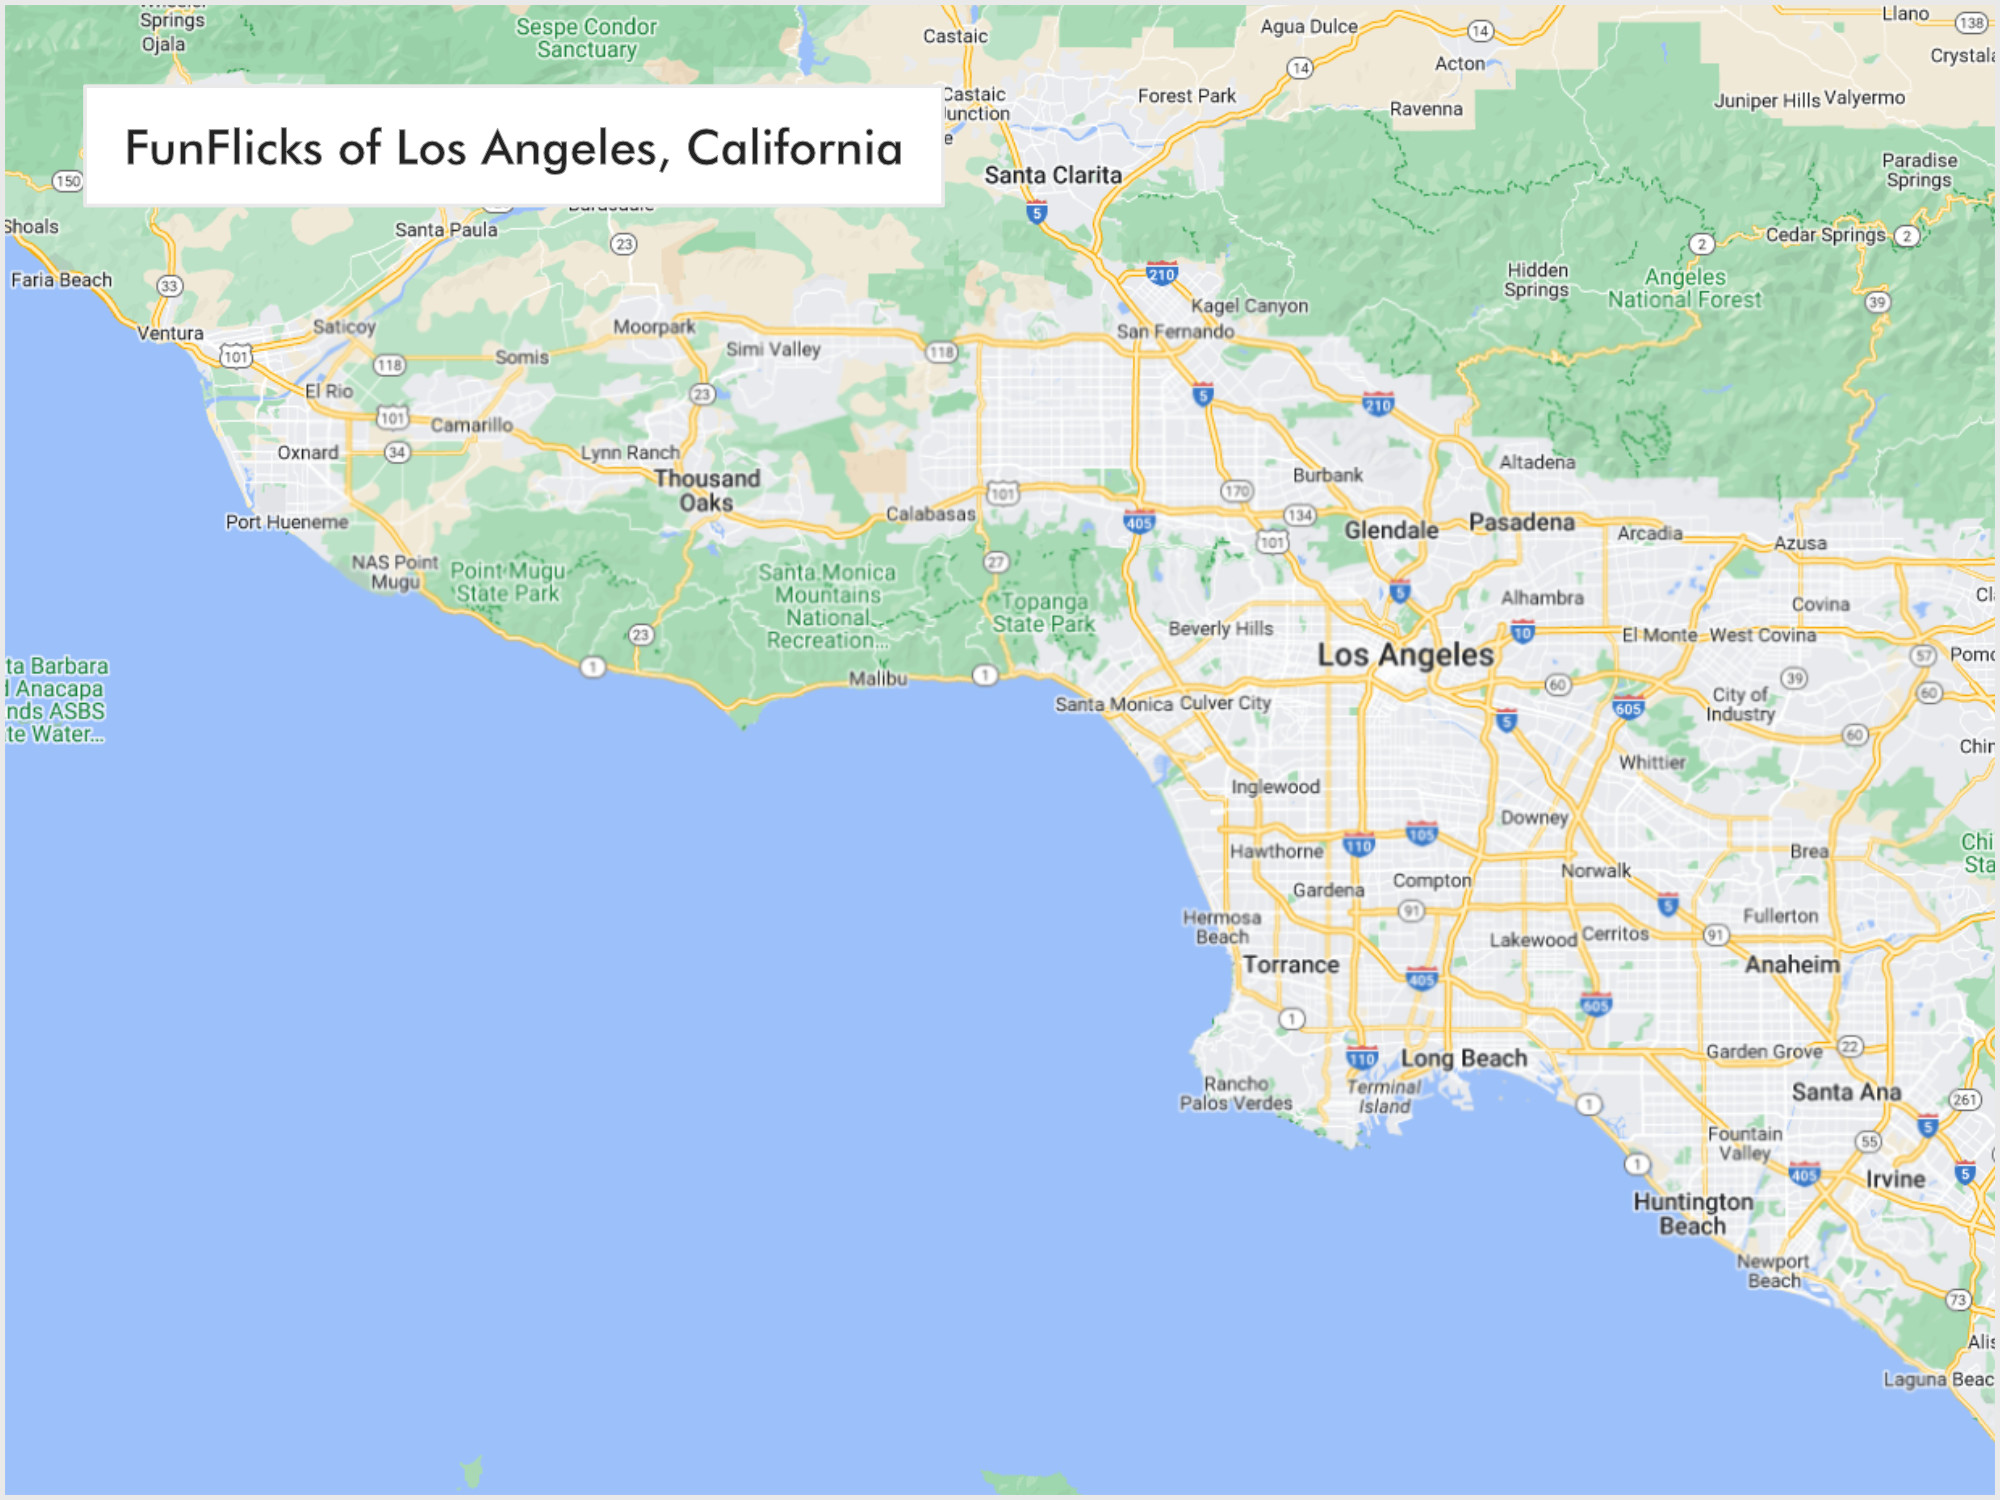 FunFlicks® Los Angeles territory map